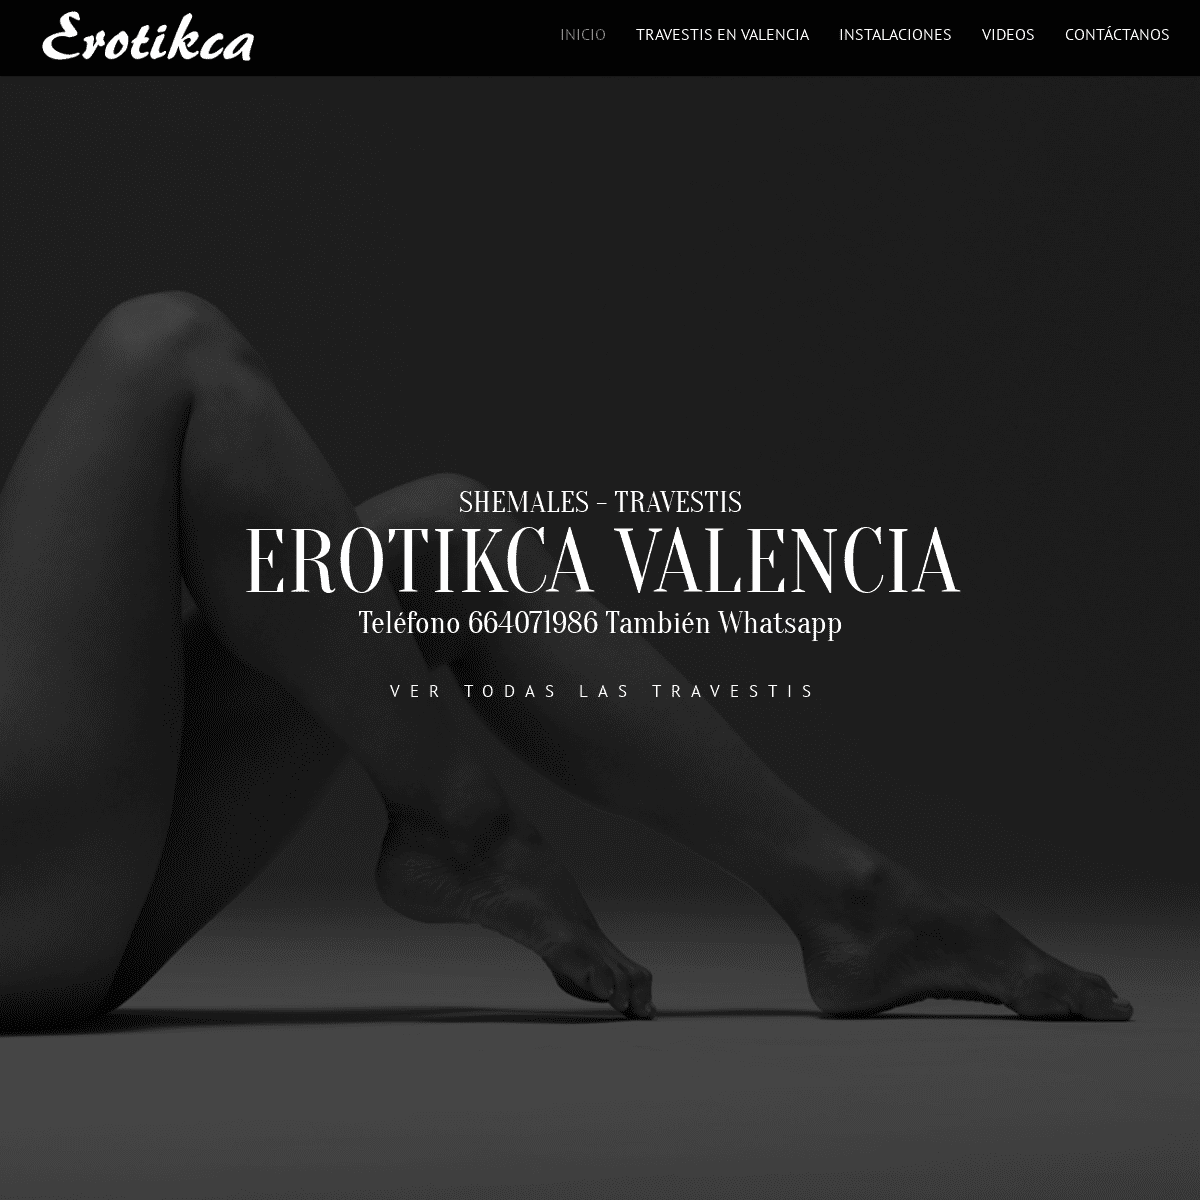 A complete backup of erotikca.com